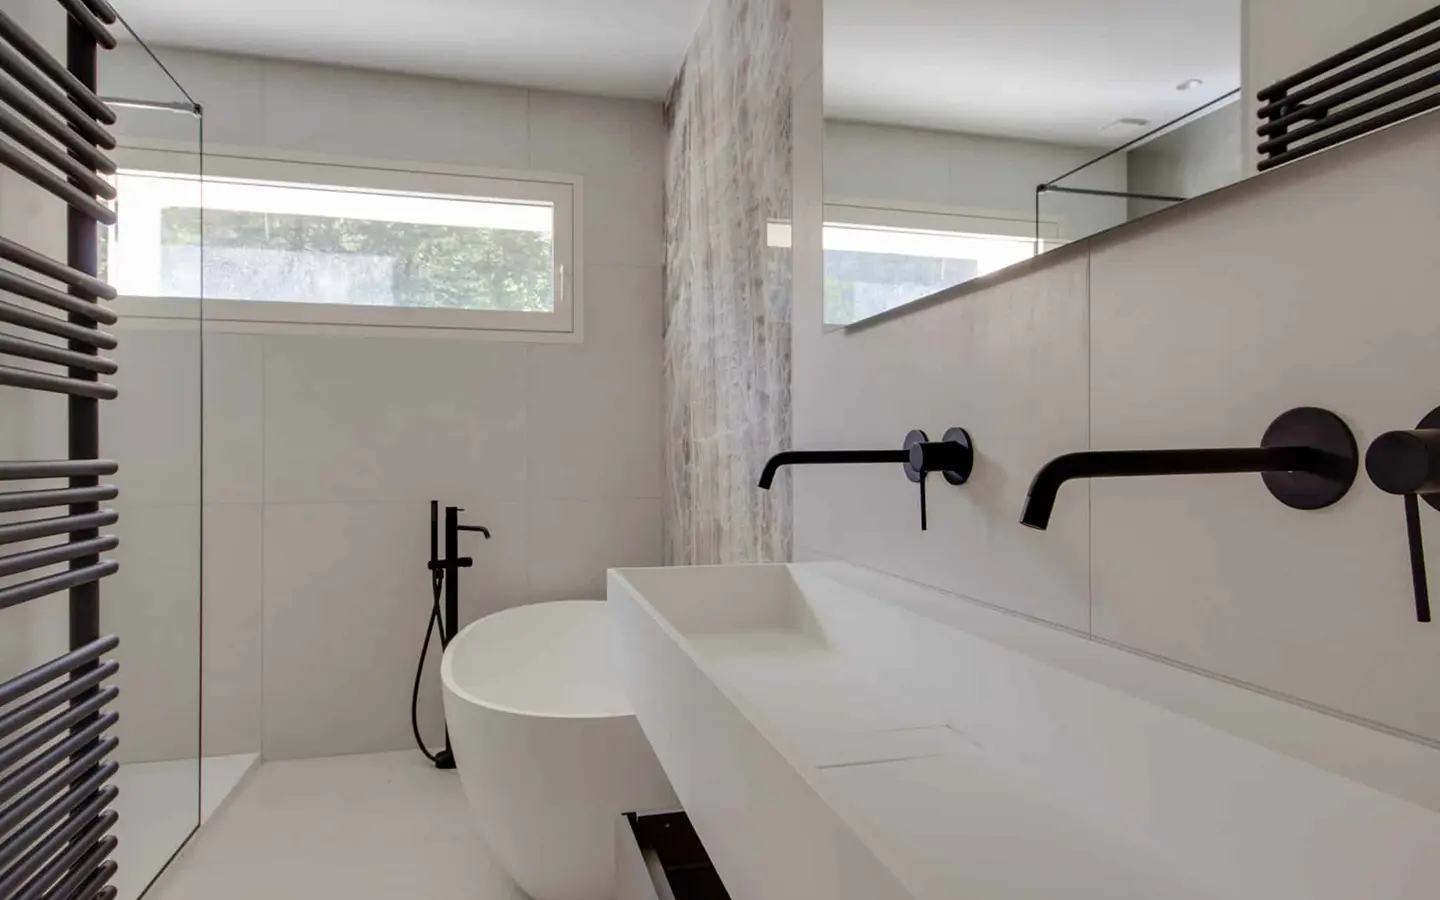 Achat immobilier maison Menthon-Saint-Bernard salle de bains moderne